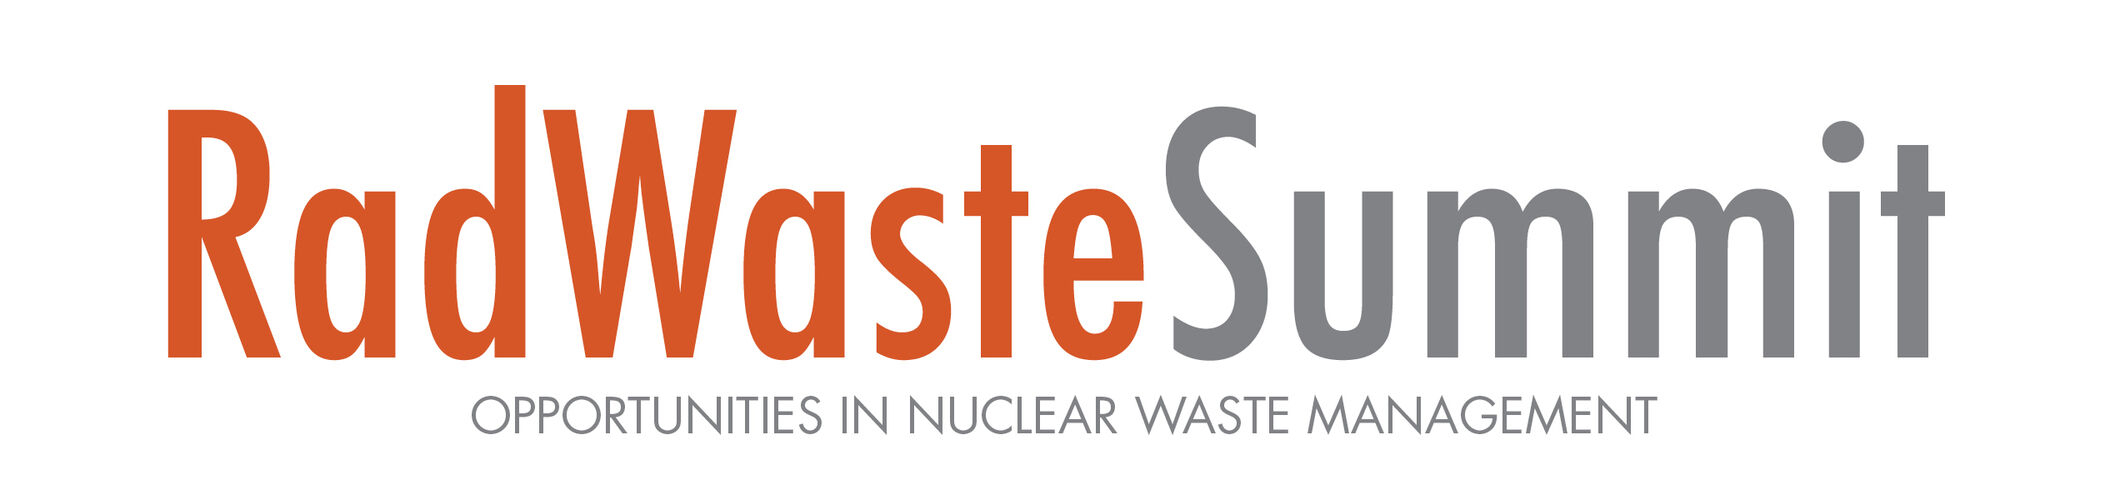 RadWaste Summit logo